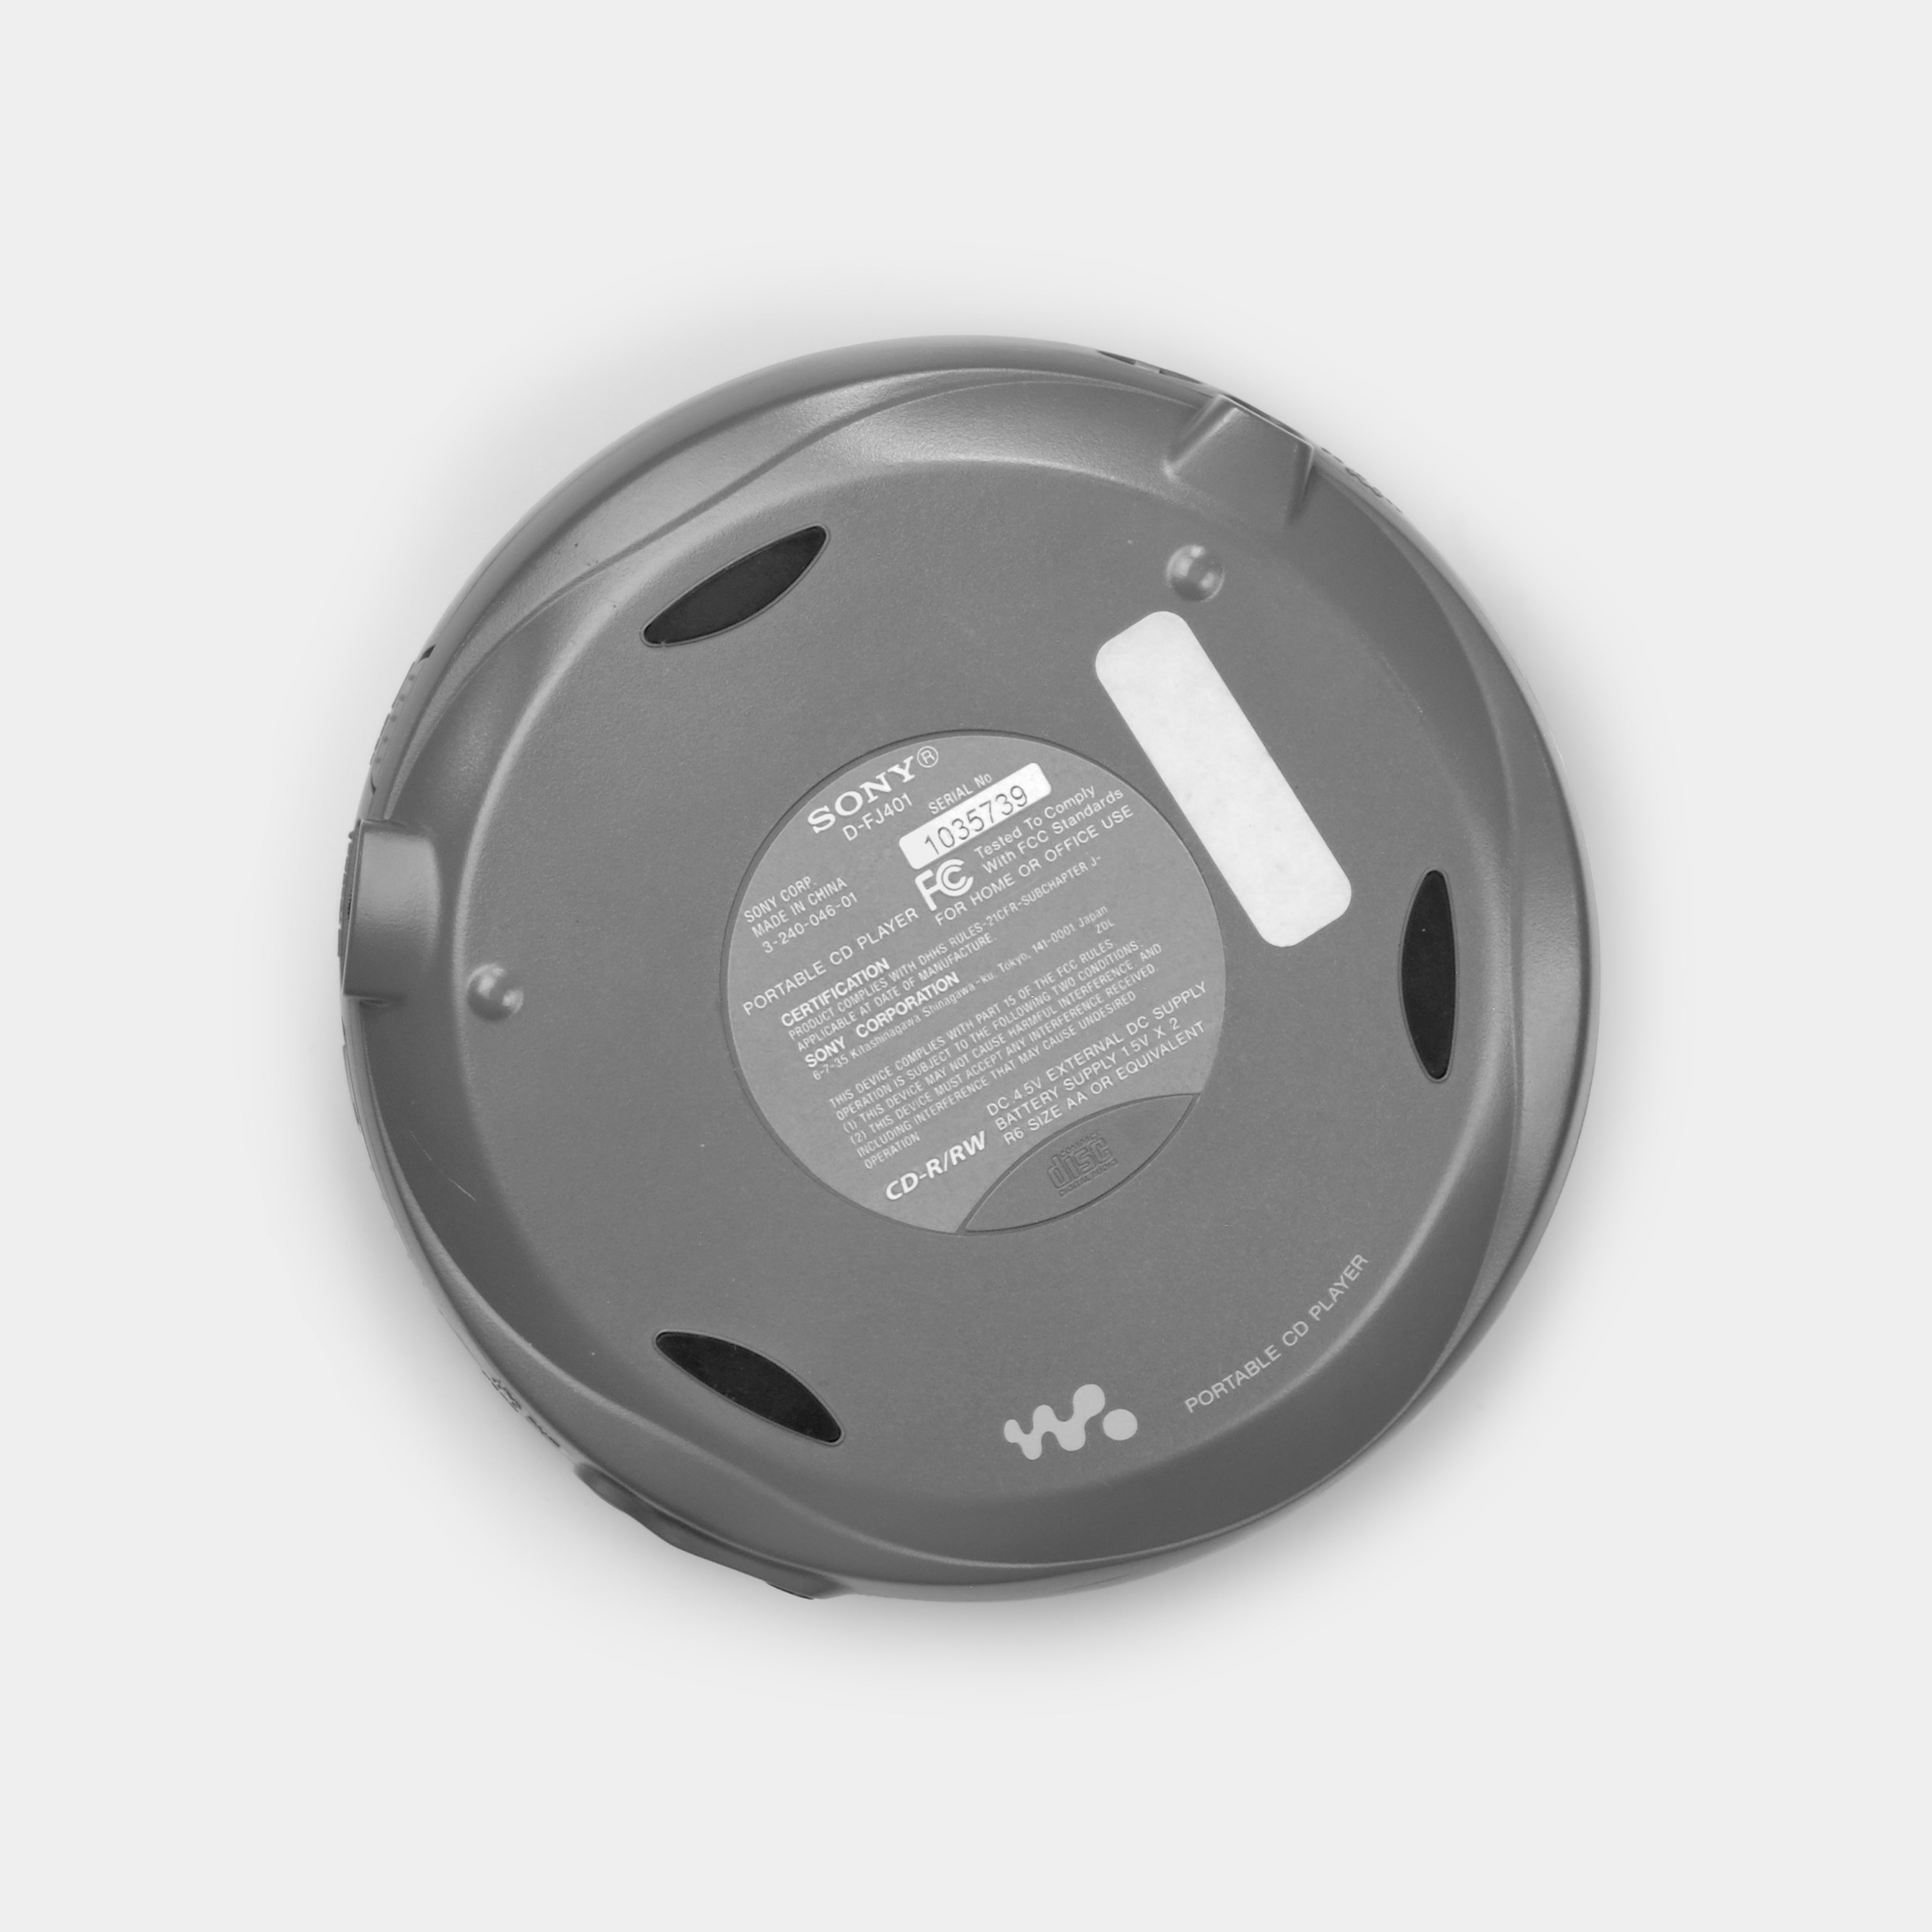 Sony Walkman G-Protection D-FJ401 Portable CD Player